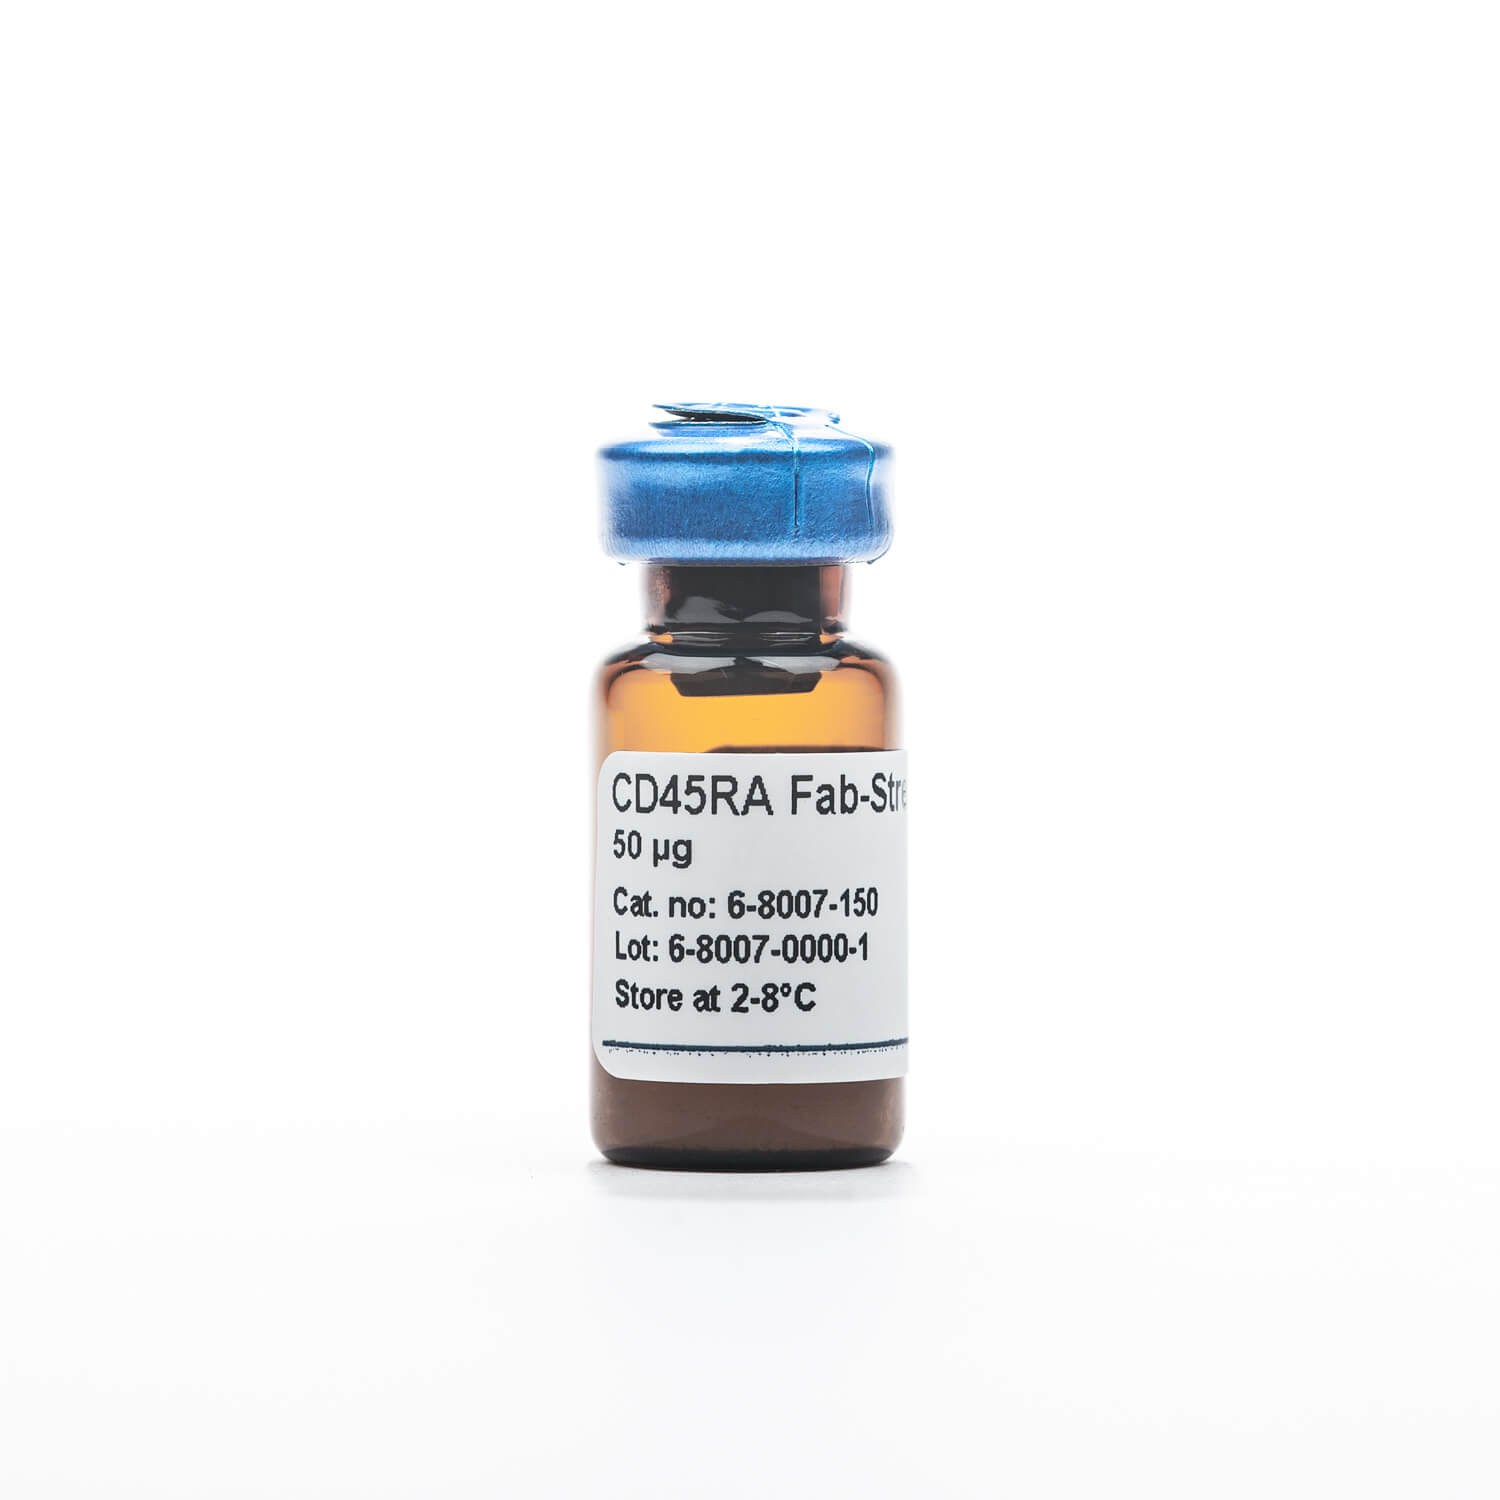 CD45RA Fab-Strep, human